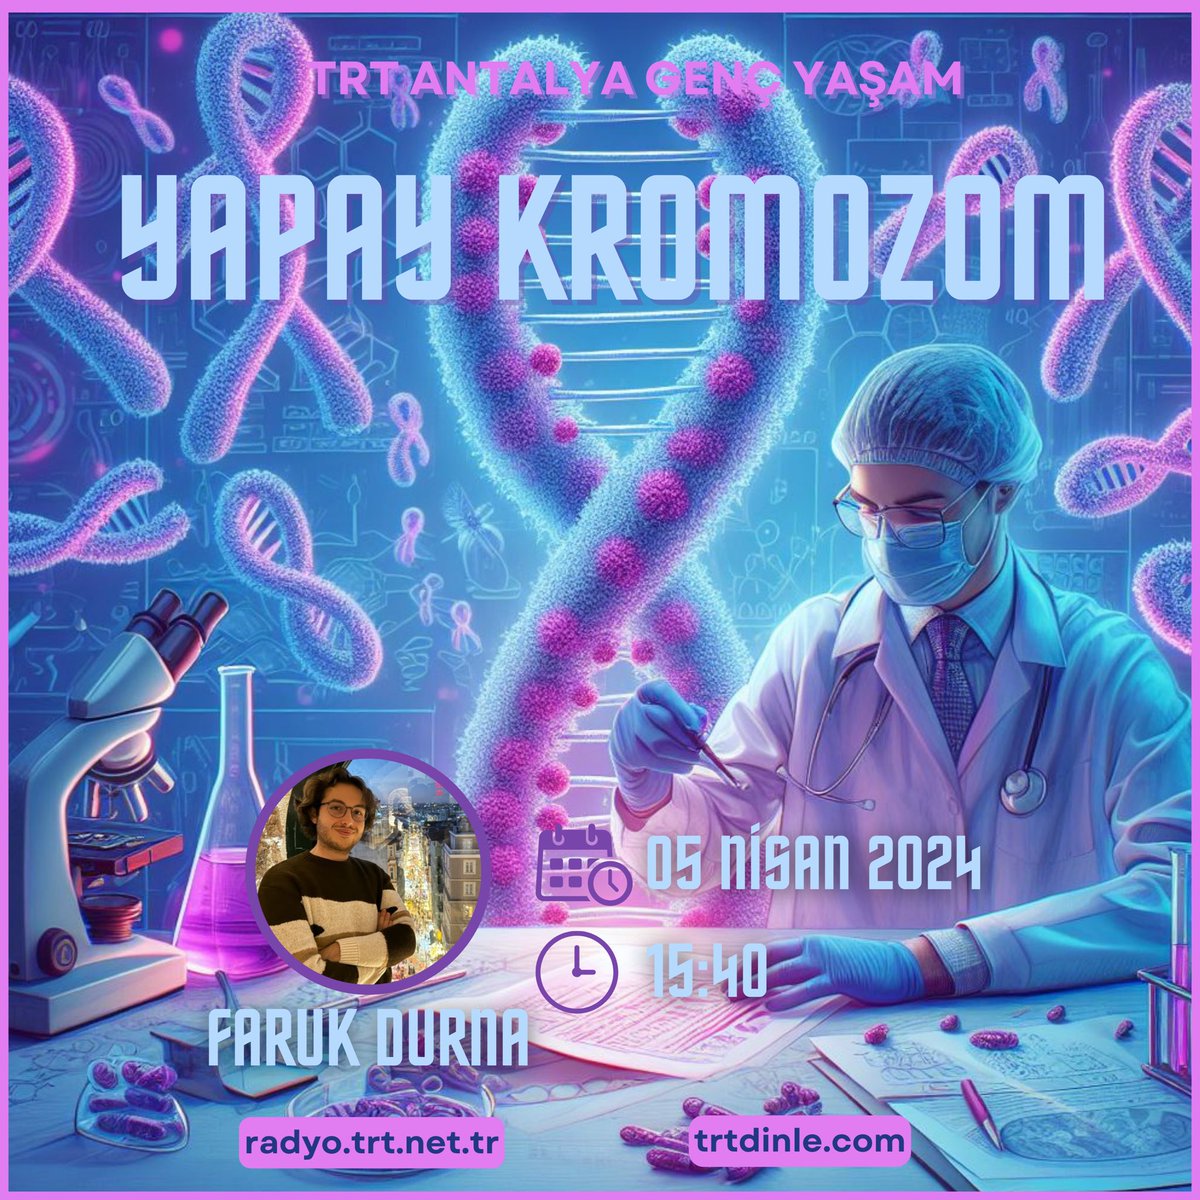 🗓️ 05 Nisan Cuma günü saat 15.40’ta, TRT Antalya Genç Yaşam programında “Yapay Kromozom” hakkında konuşacağım.

Trt Radyosu: trtdinle.com/channel/antaly…

#YapayKromozom #İleriTeknoloji #Biyoteknoloji #ArtificialChromosome #GeneTherapy #AdvancedTechnology #Biotechnology